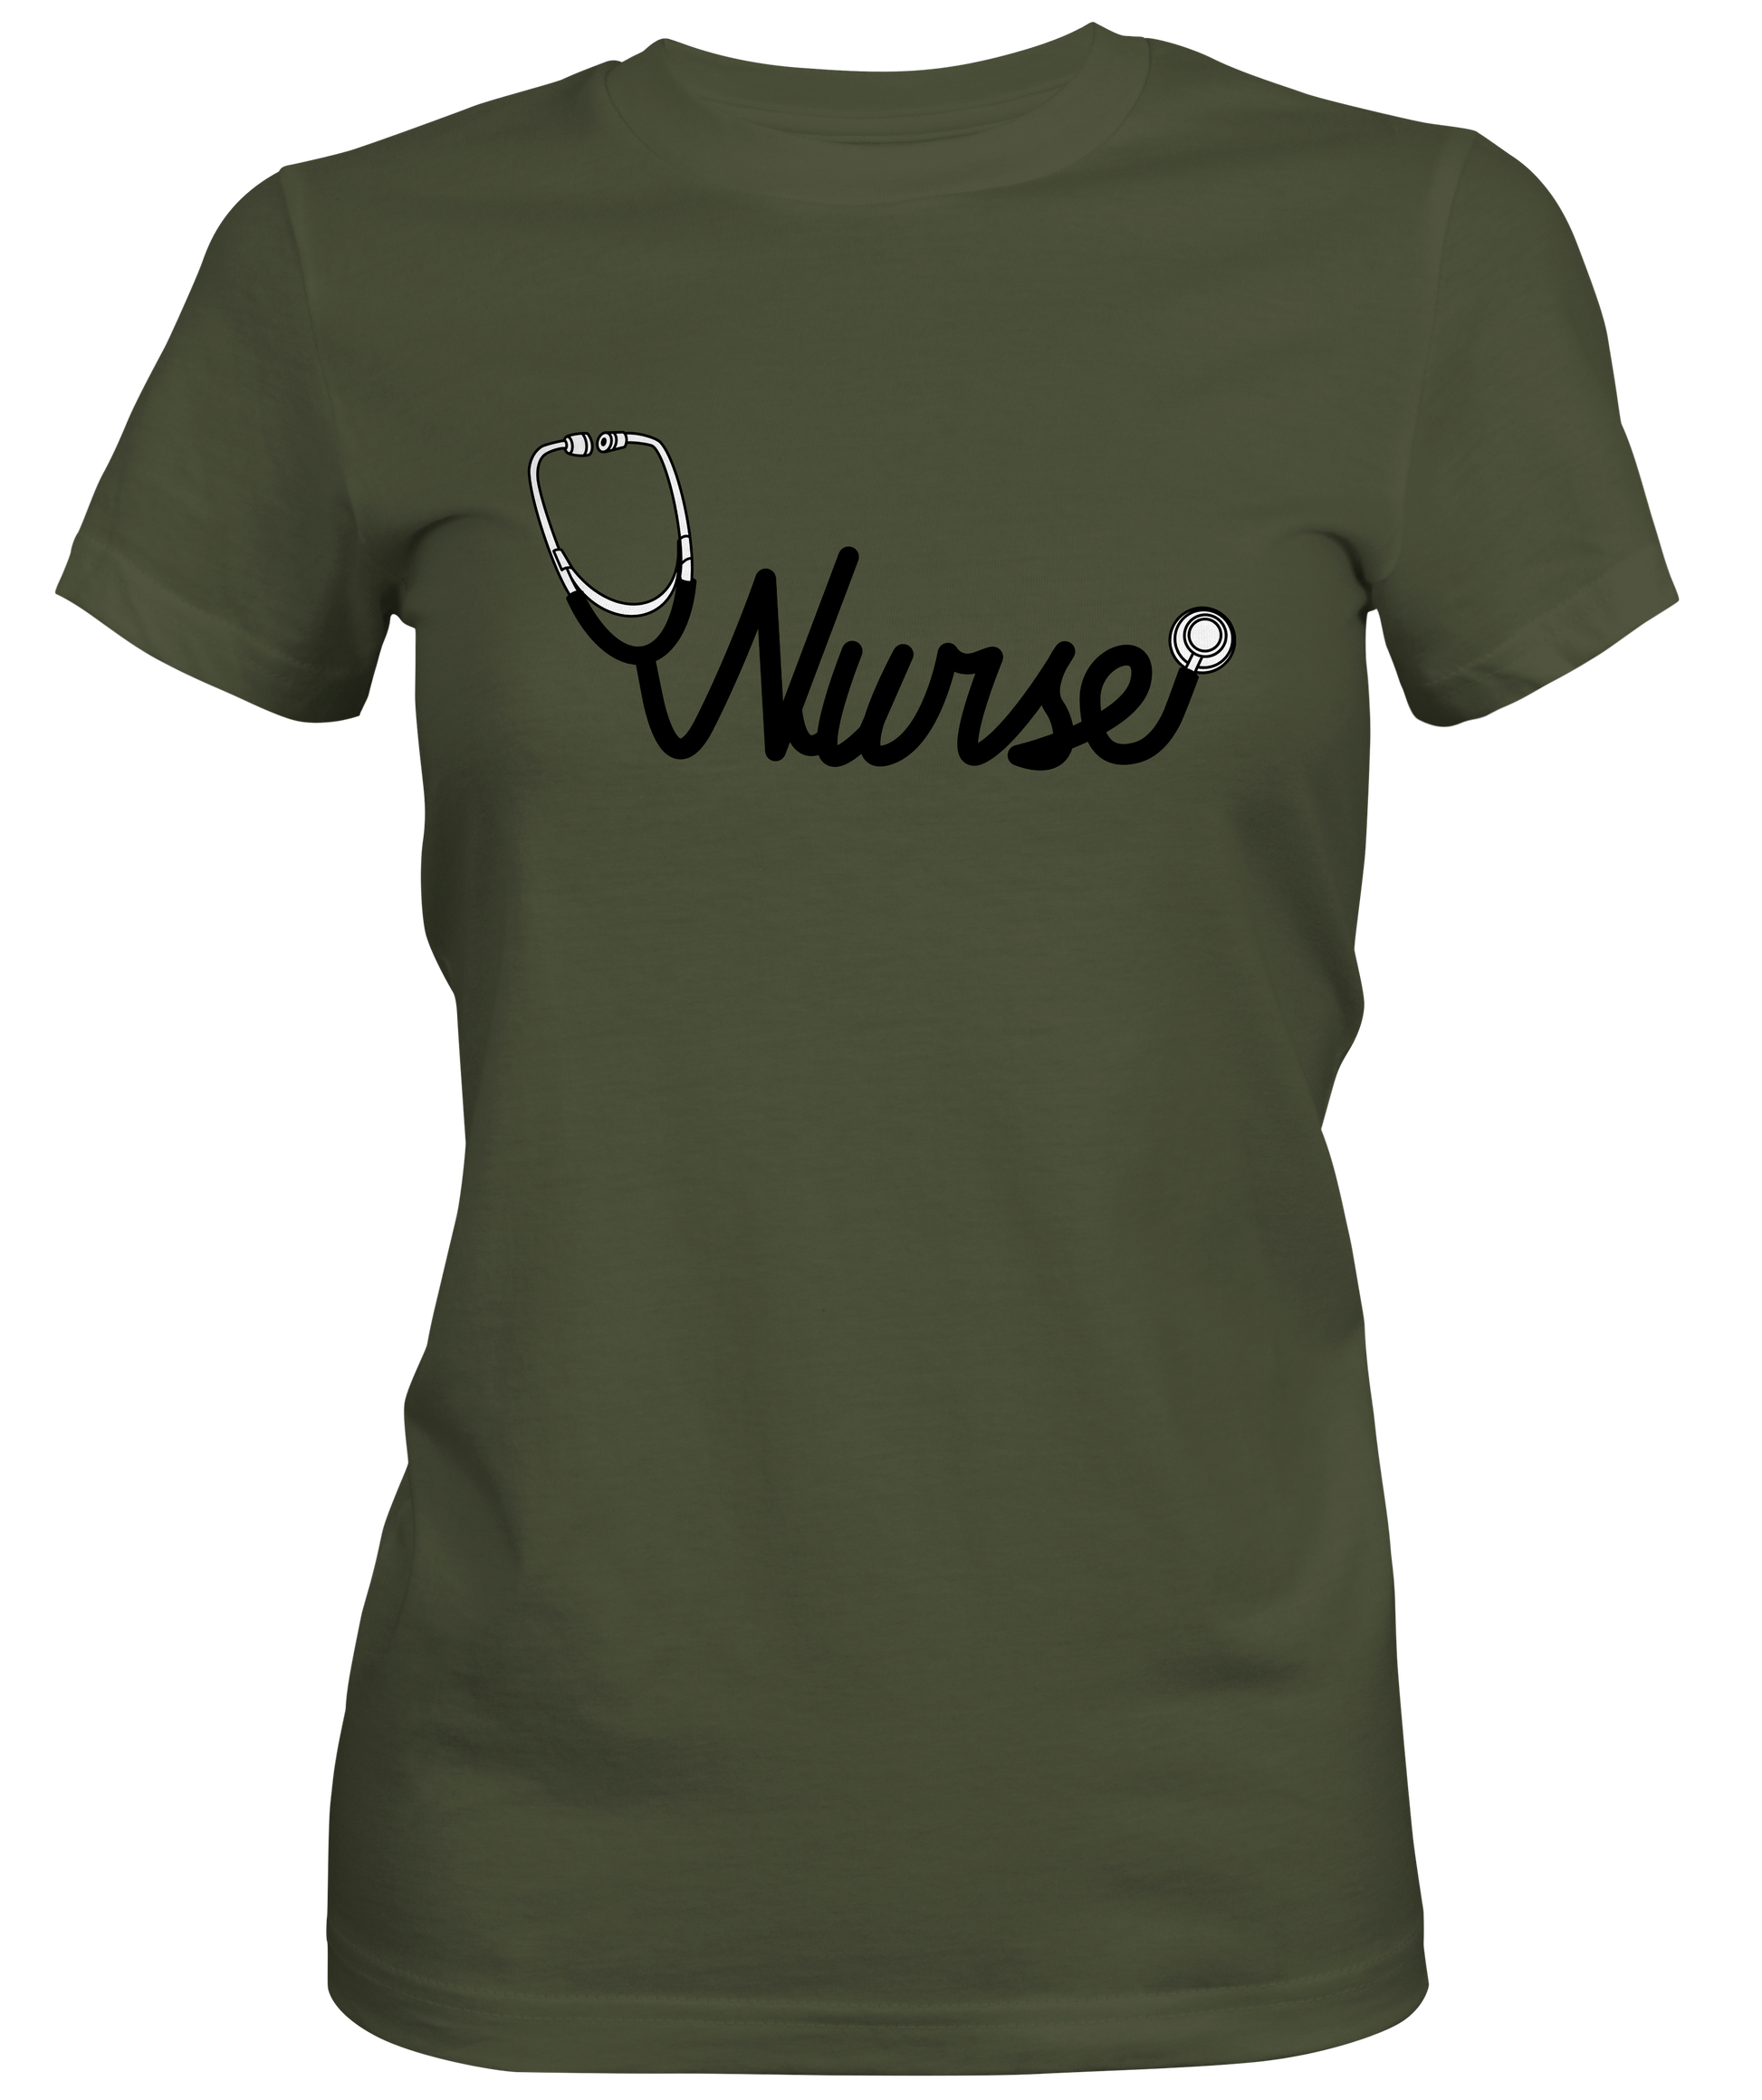 A Nurse Ladies Graphic Tee